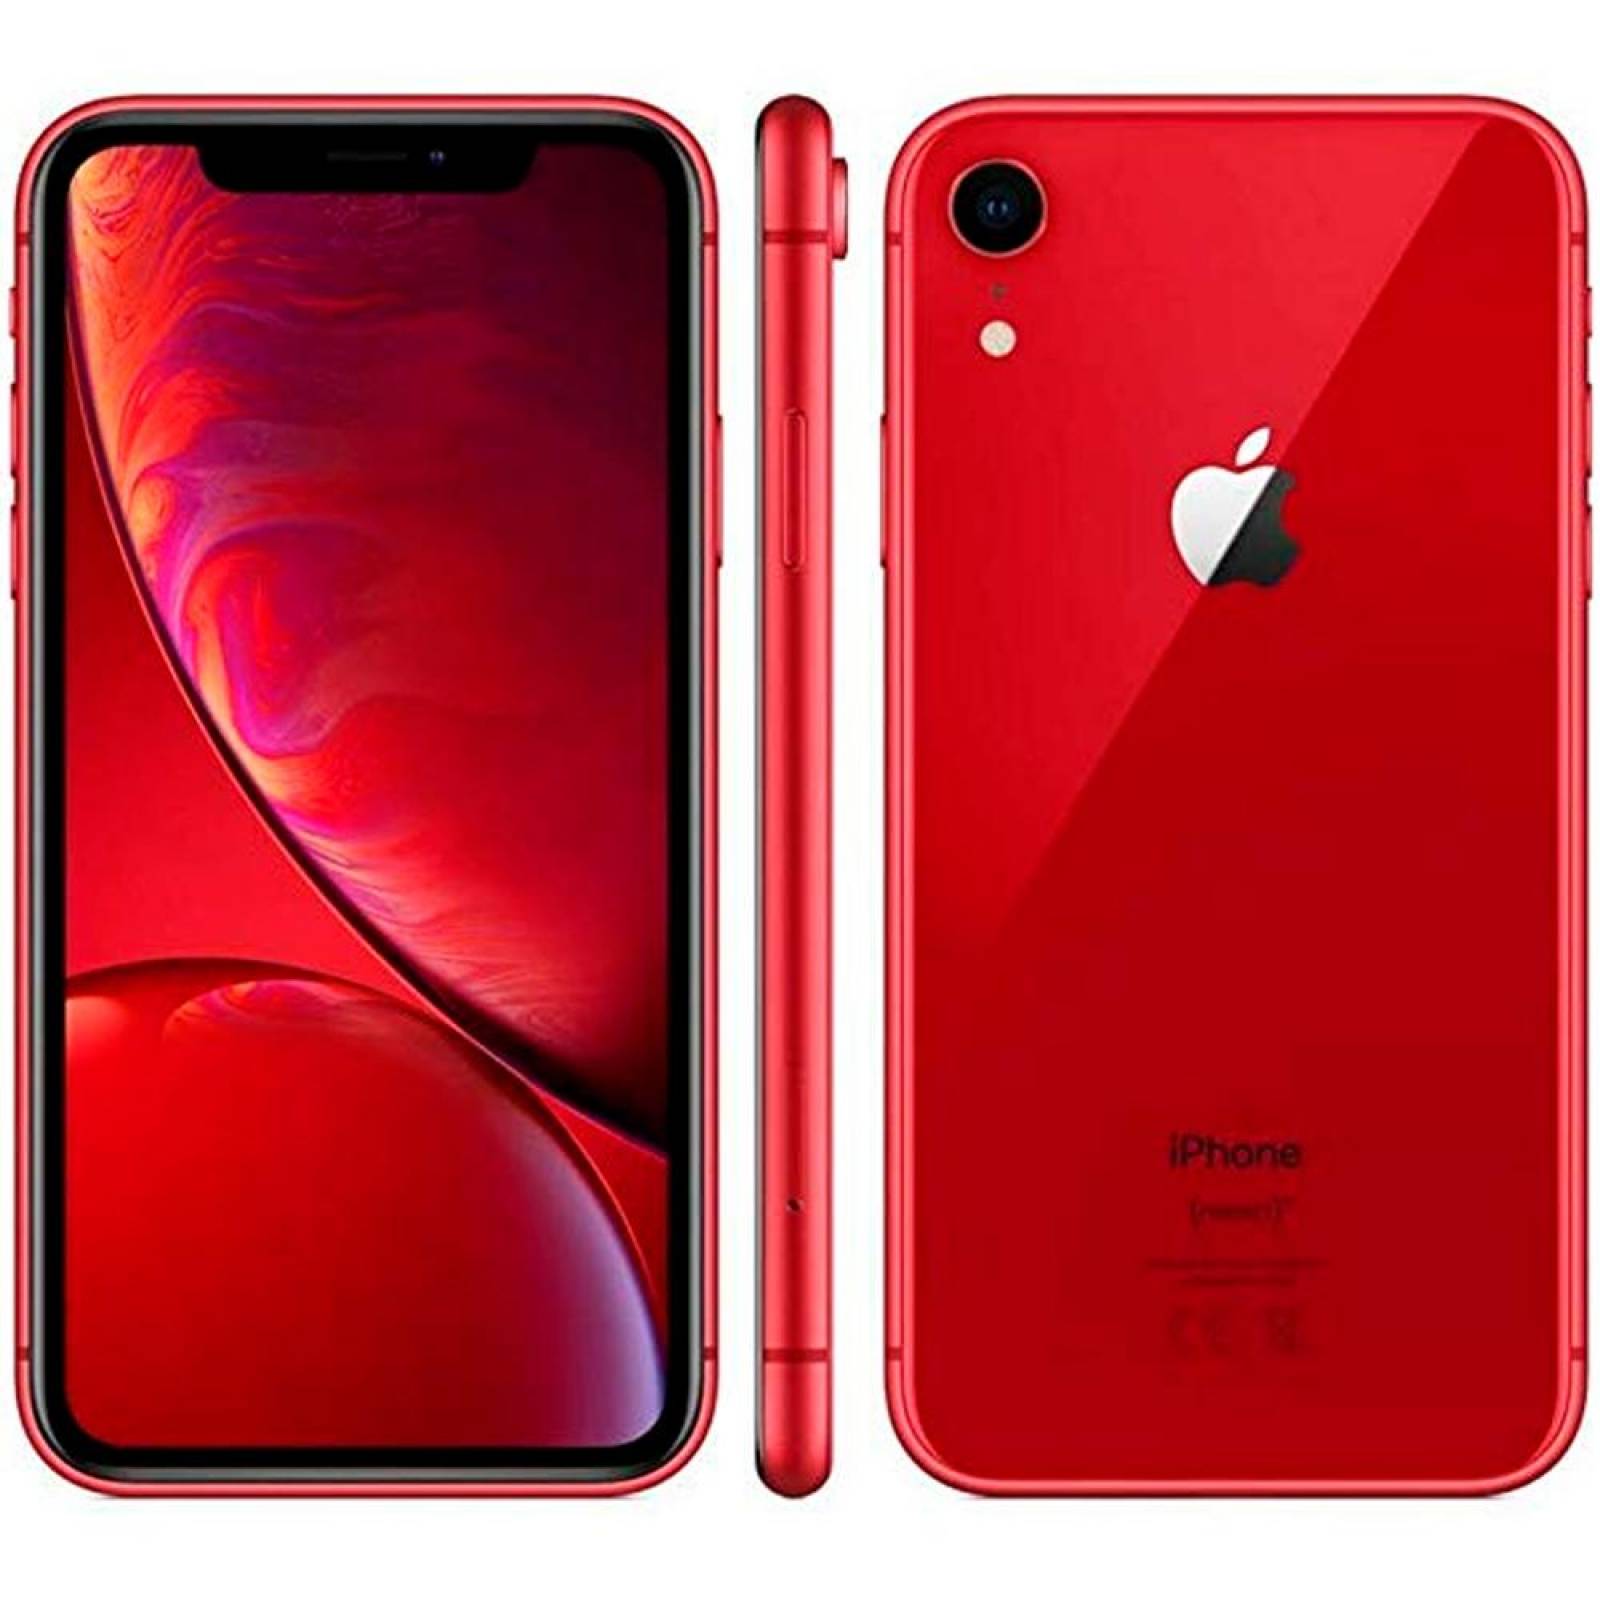 Celular APPLE iPhone XR 3GB 64GB Hexa Core iOS 12 Red MT062J/A Open Box 